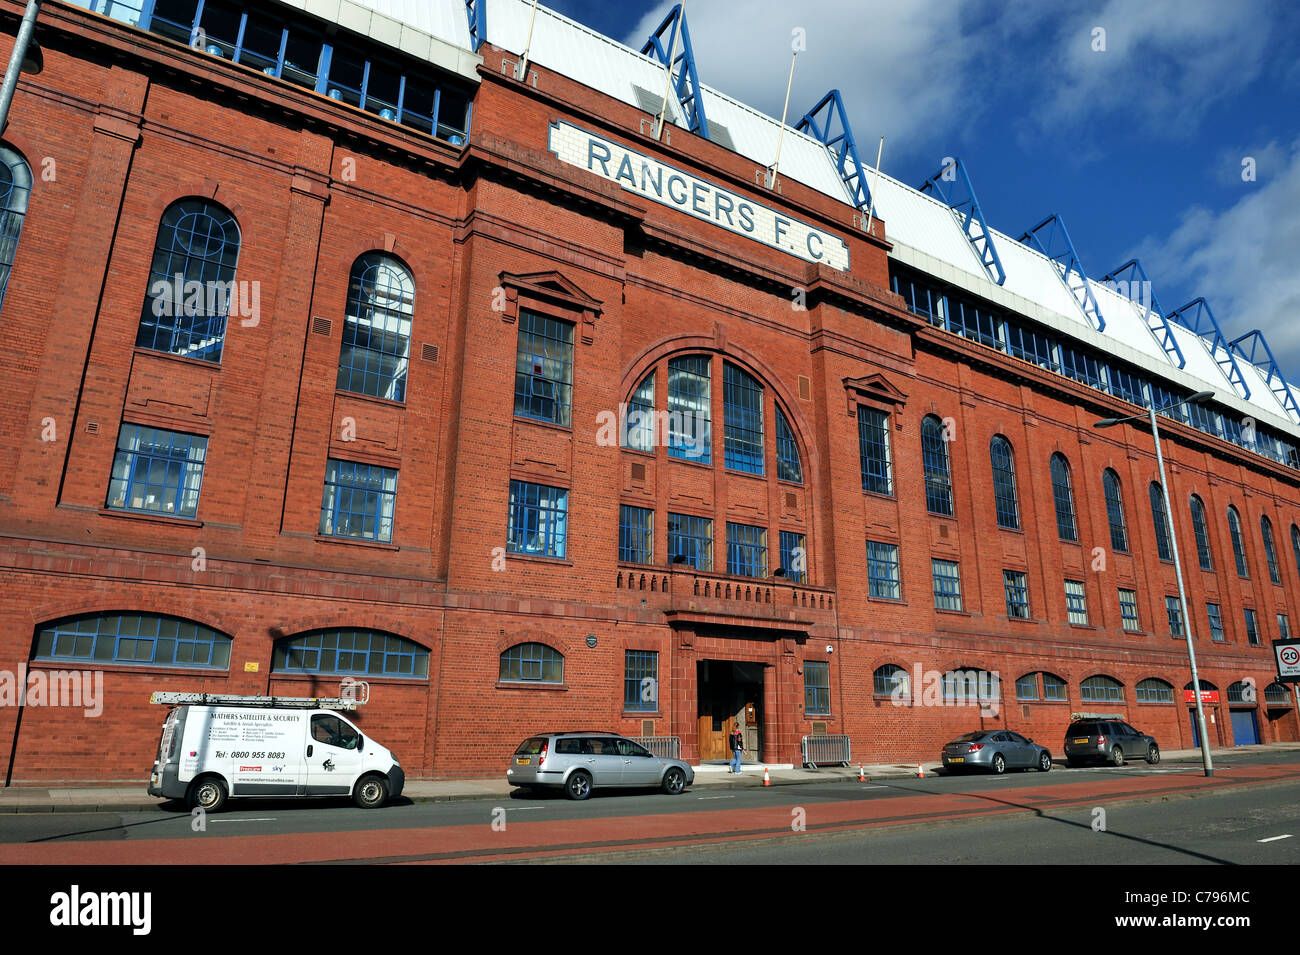 Ibrox stadium, home of Rangers Football Club Stock Photo